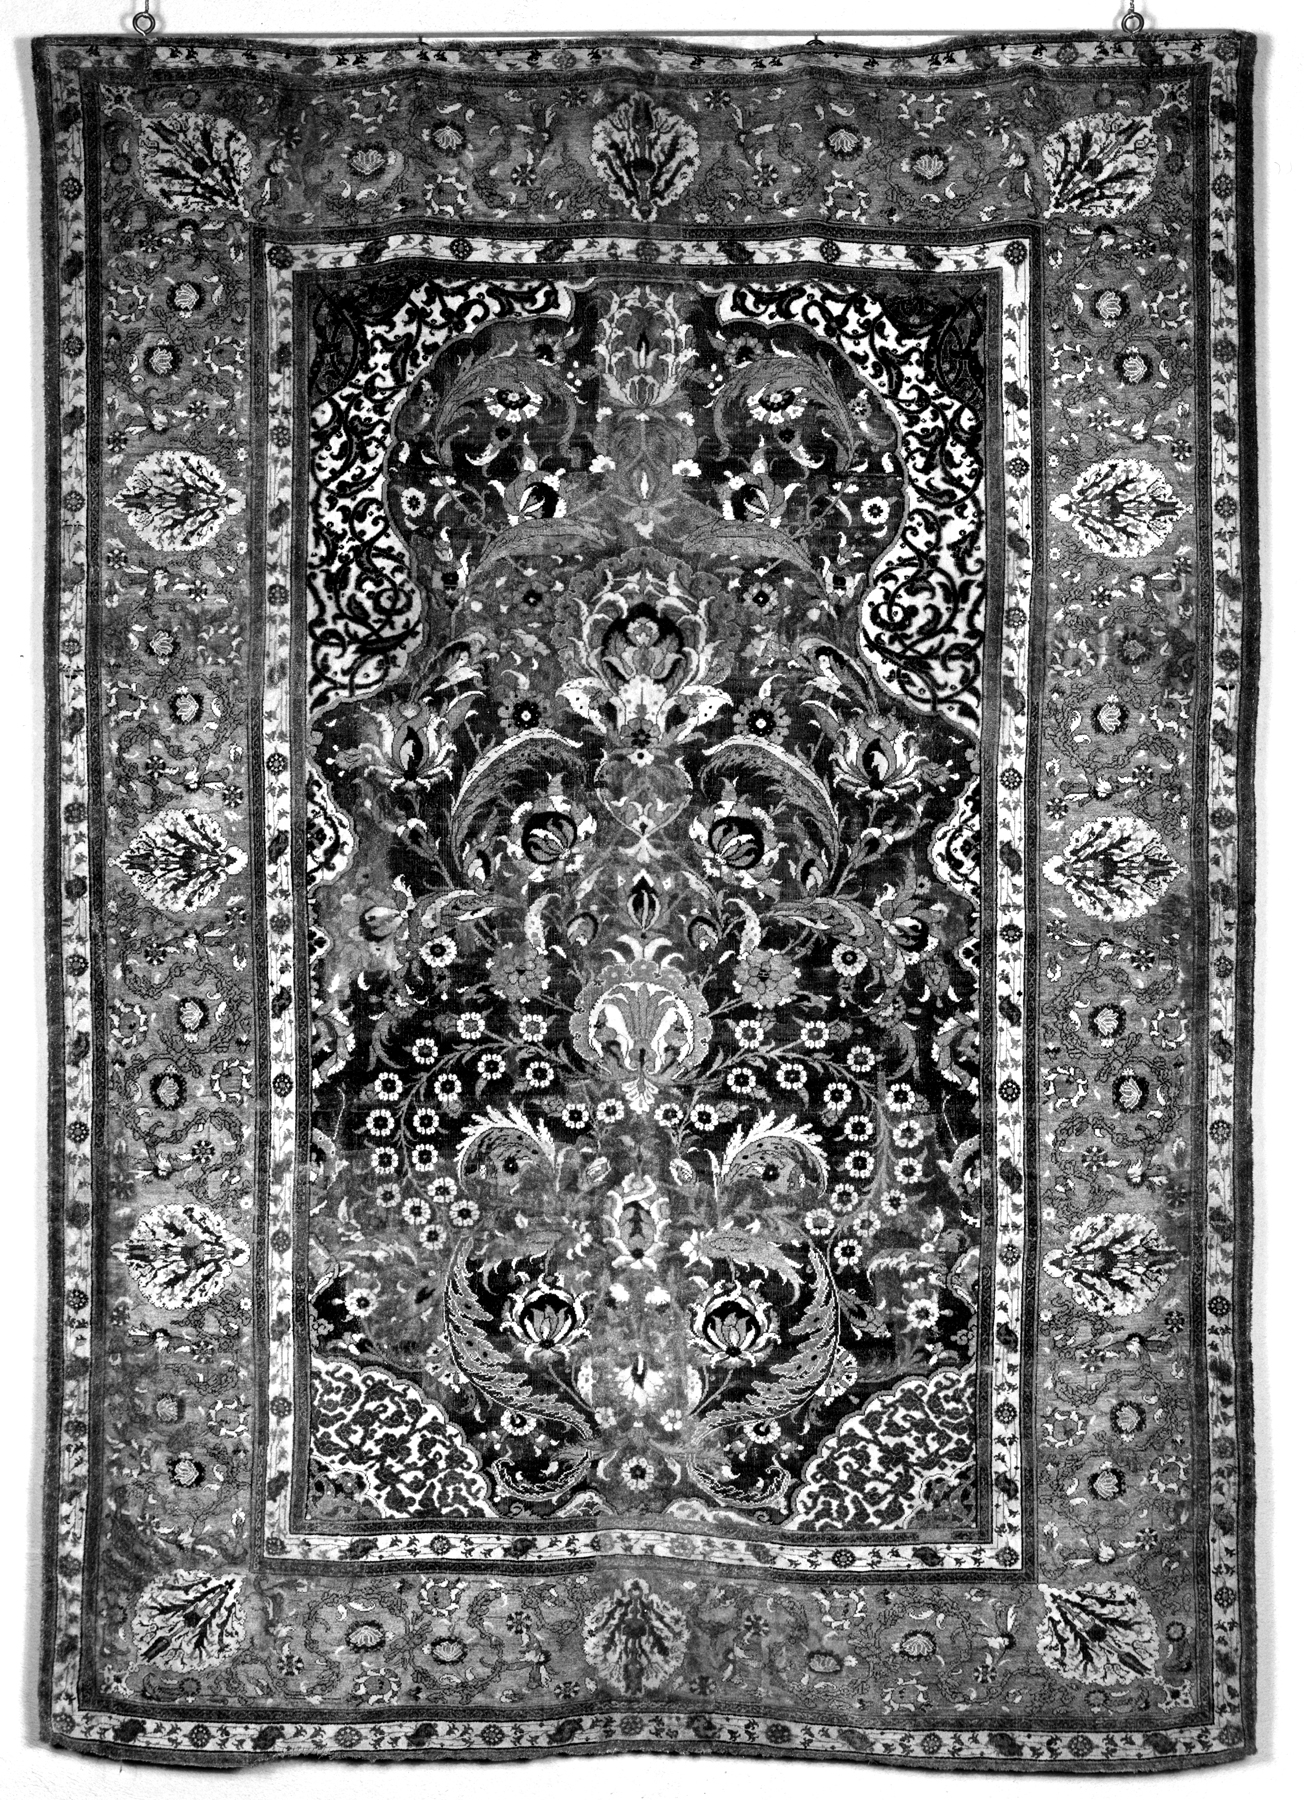 Prayer rug - Wikipedia